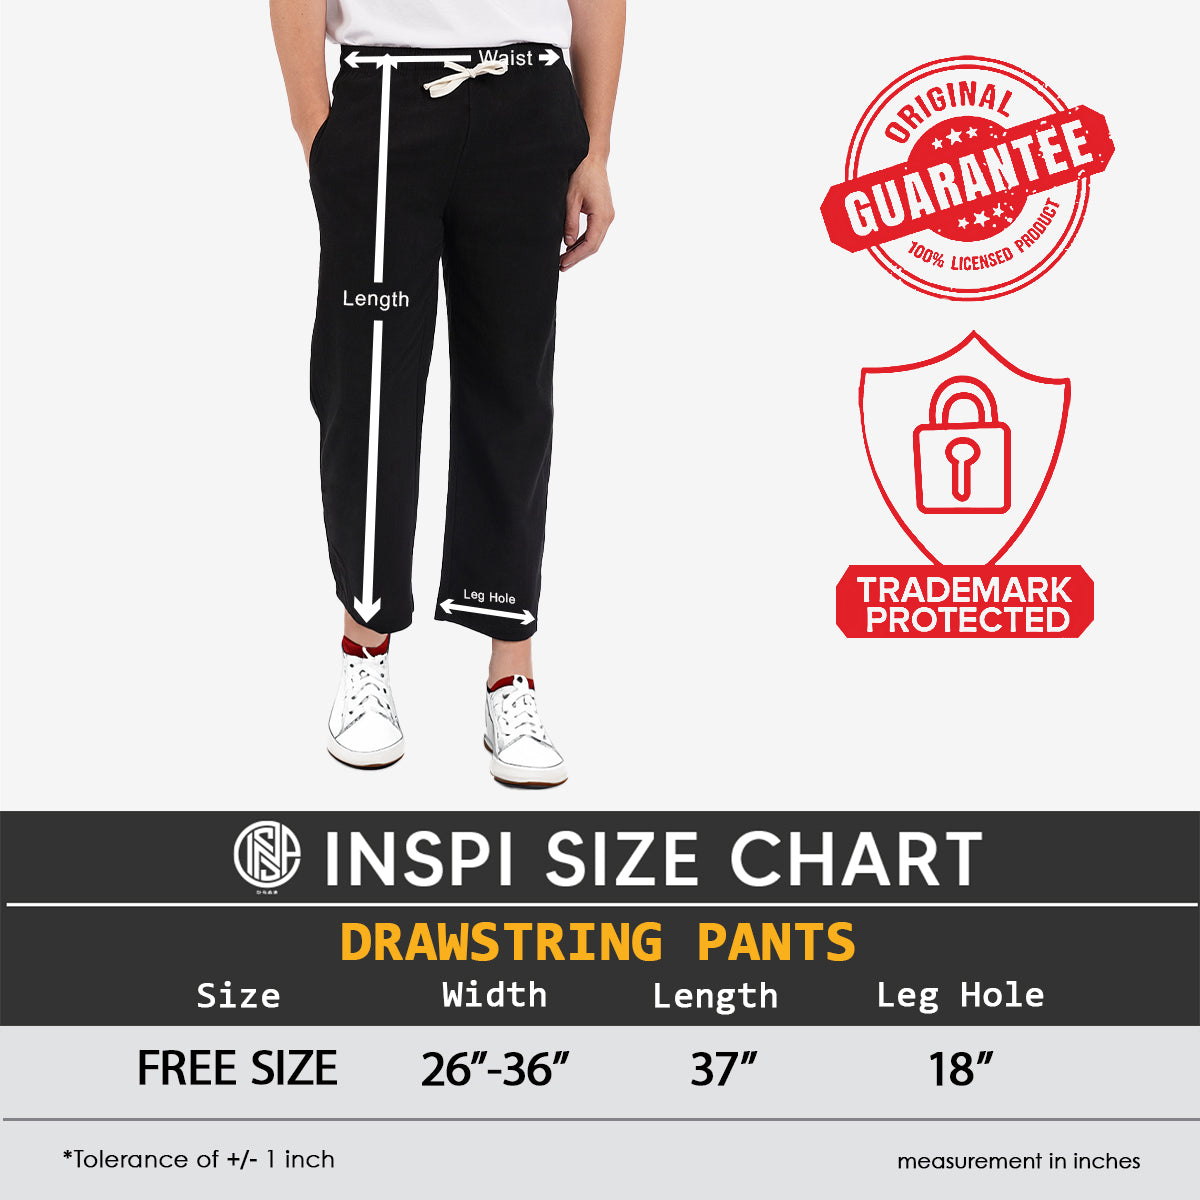 INSPI Drawstring Pants Jungle